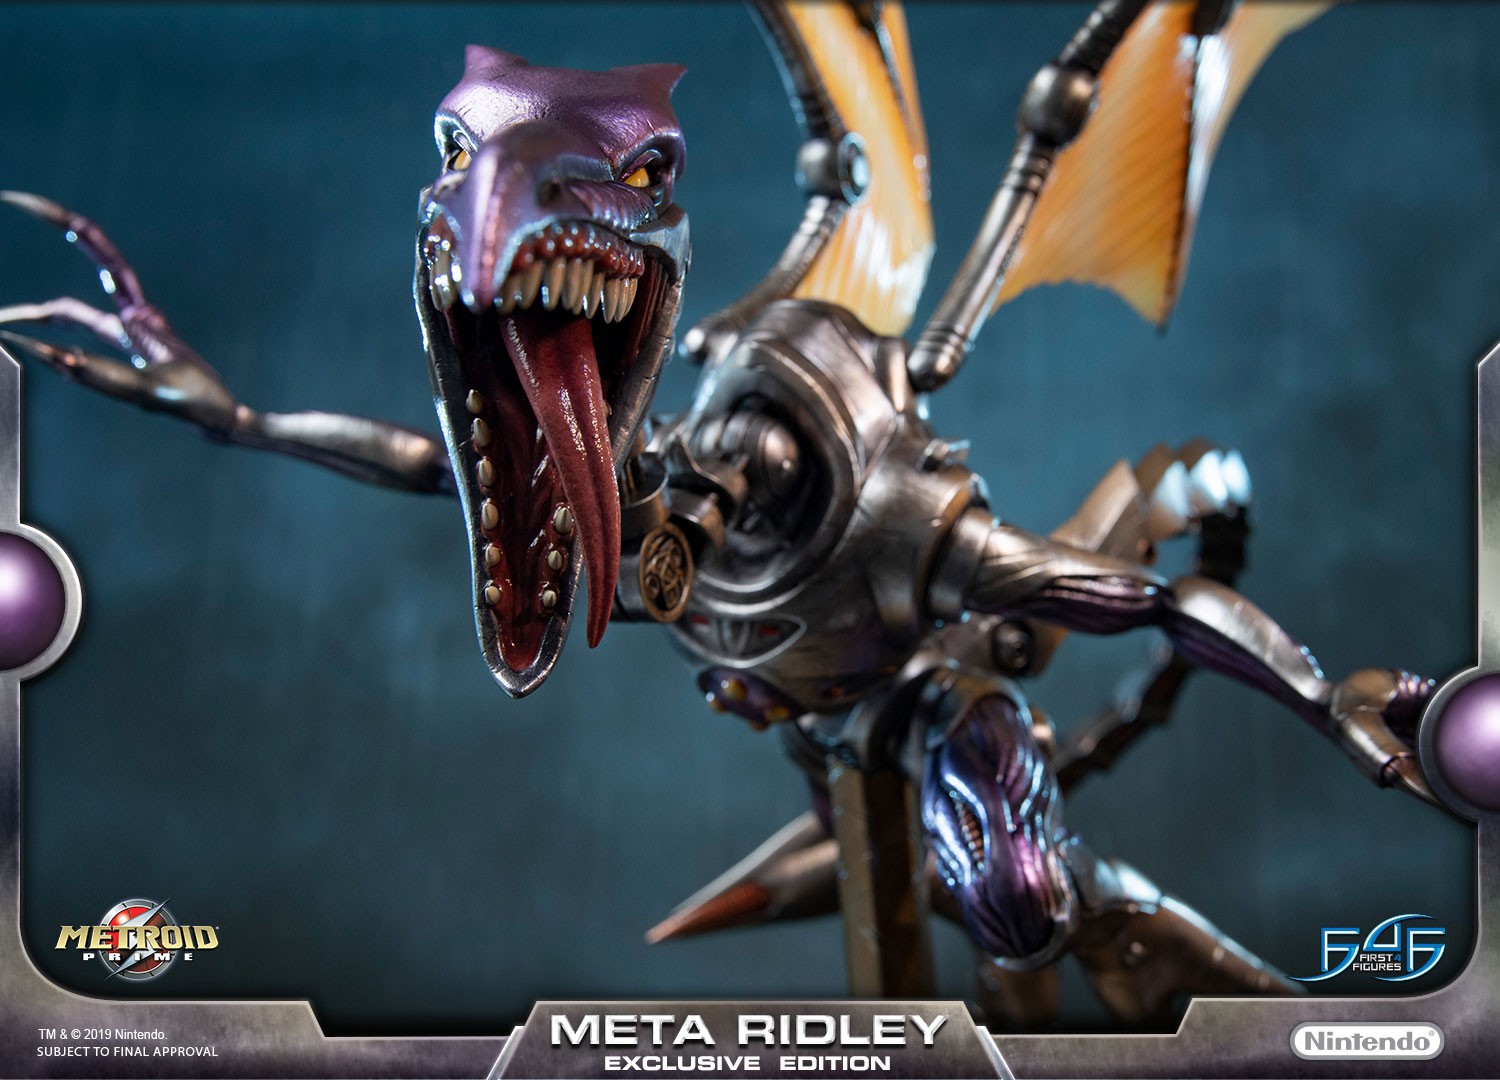 Metroid Prime – Meta Ridley Exclusive Edition